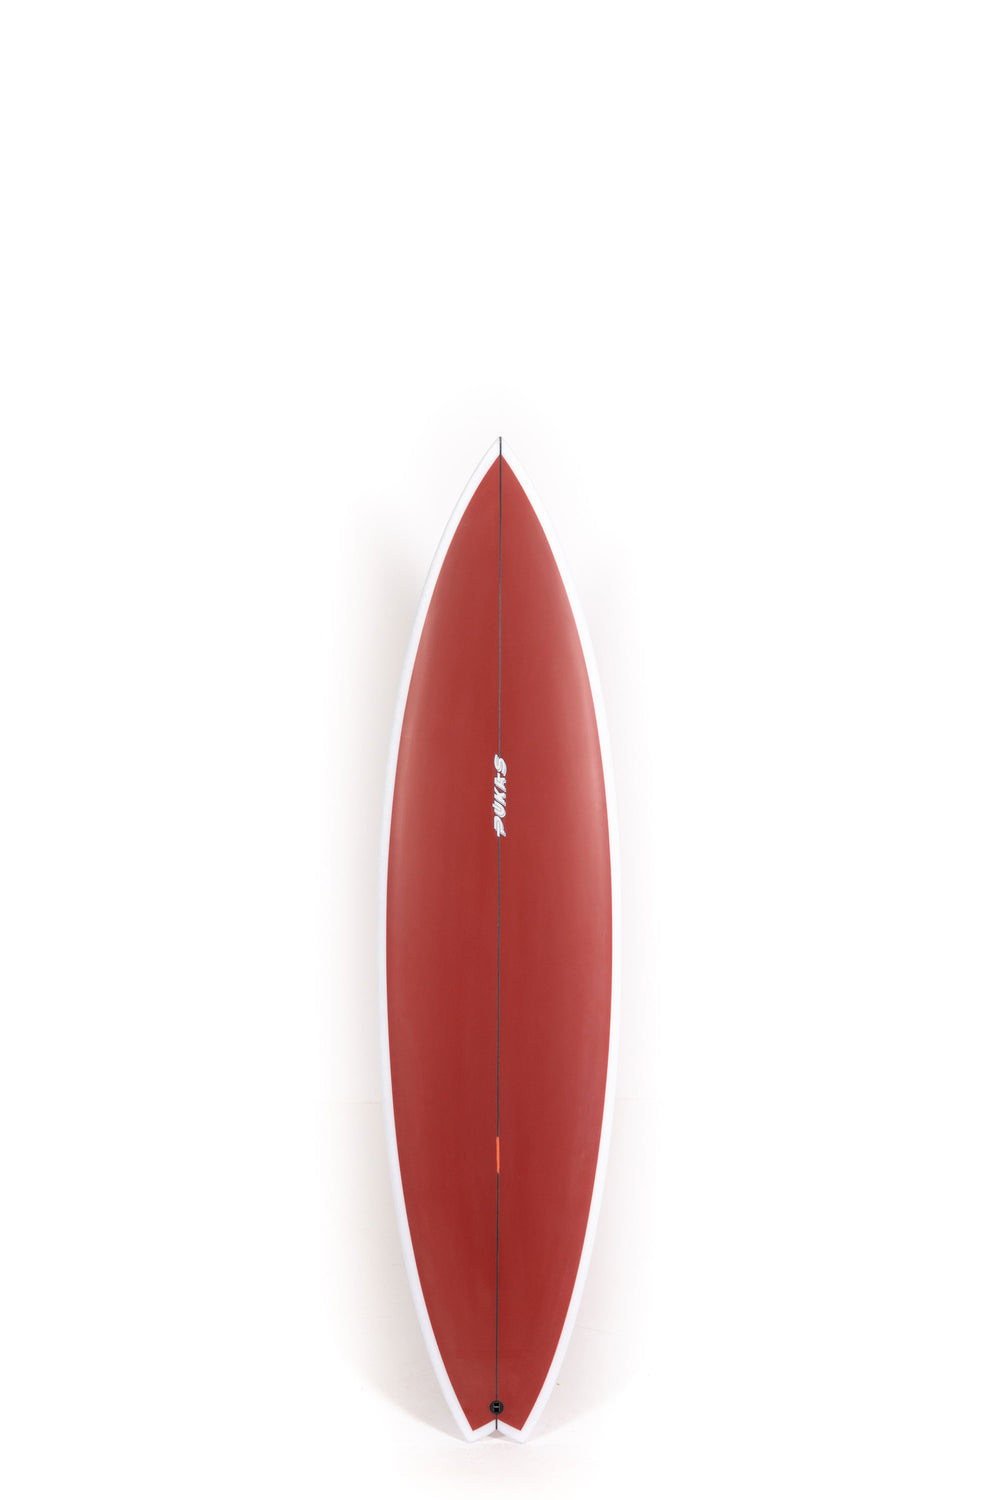 Pukas Surfboard - WATER LION ULTRA by Chris Christenson - 6'3” x 